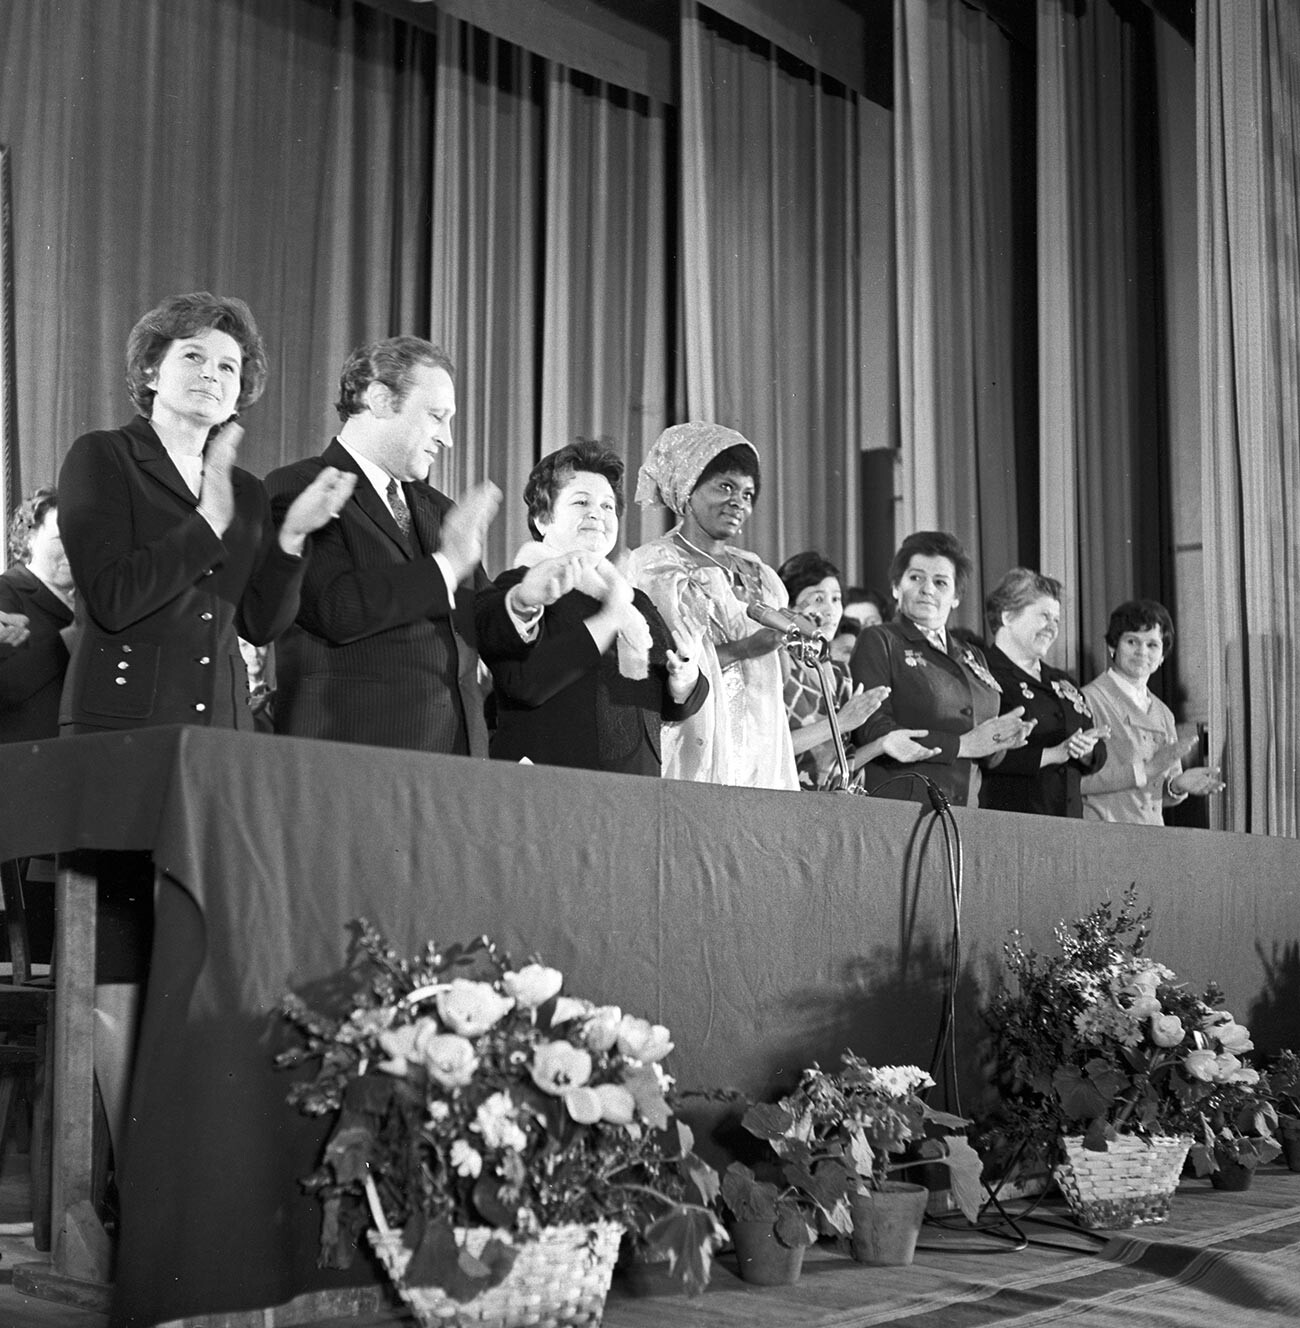 Perayaan 8 Maret di Universitas RUDN. Komite Perempuan Soviet dipimpin oleh kosmonaut Valentina Tereshkova.